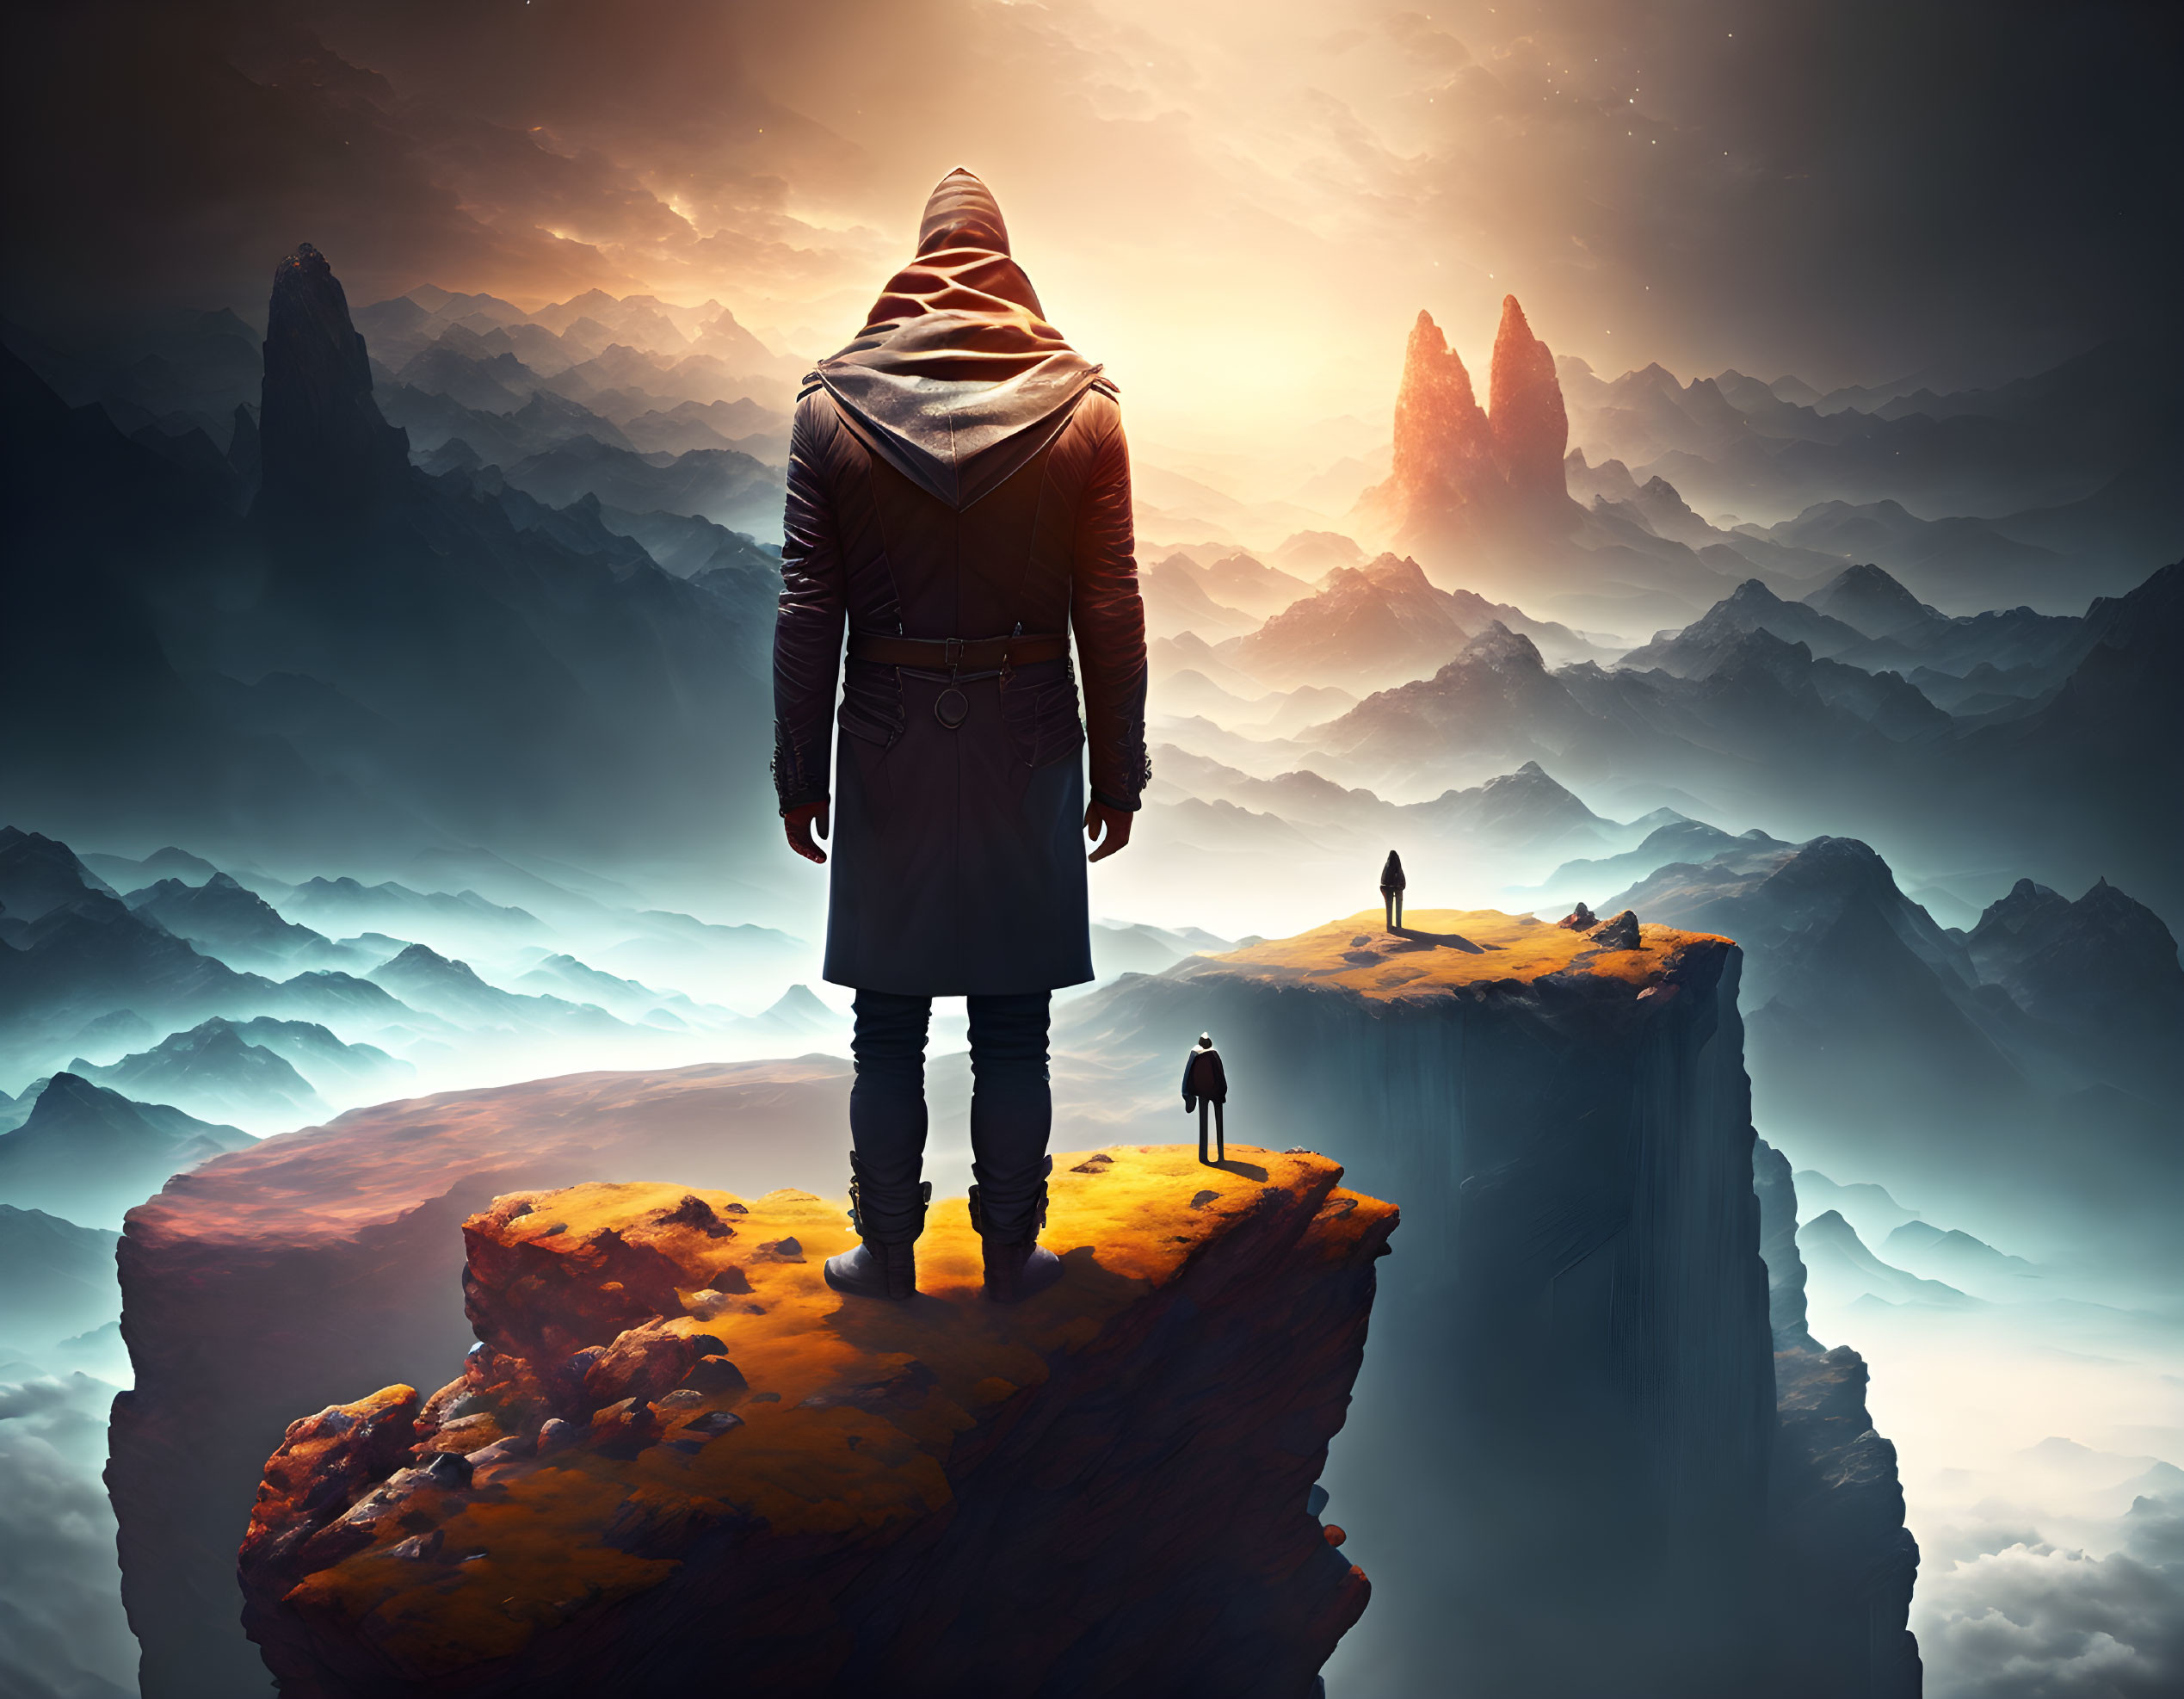 Hooded figure on cliff edge gazes at surreal landscape